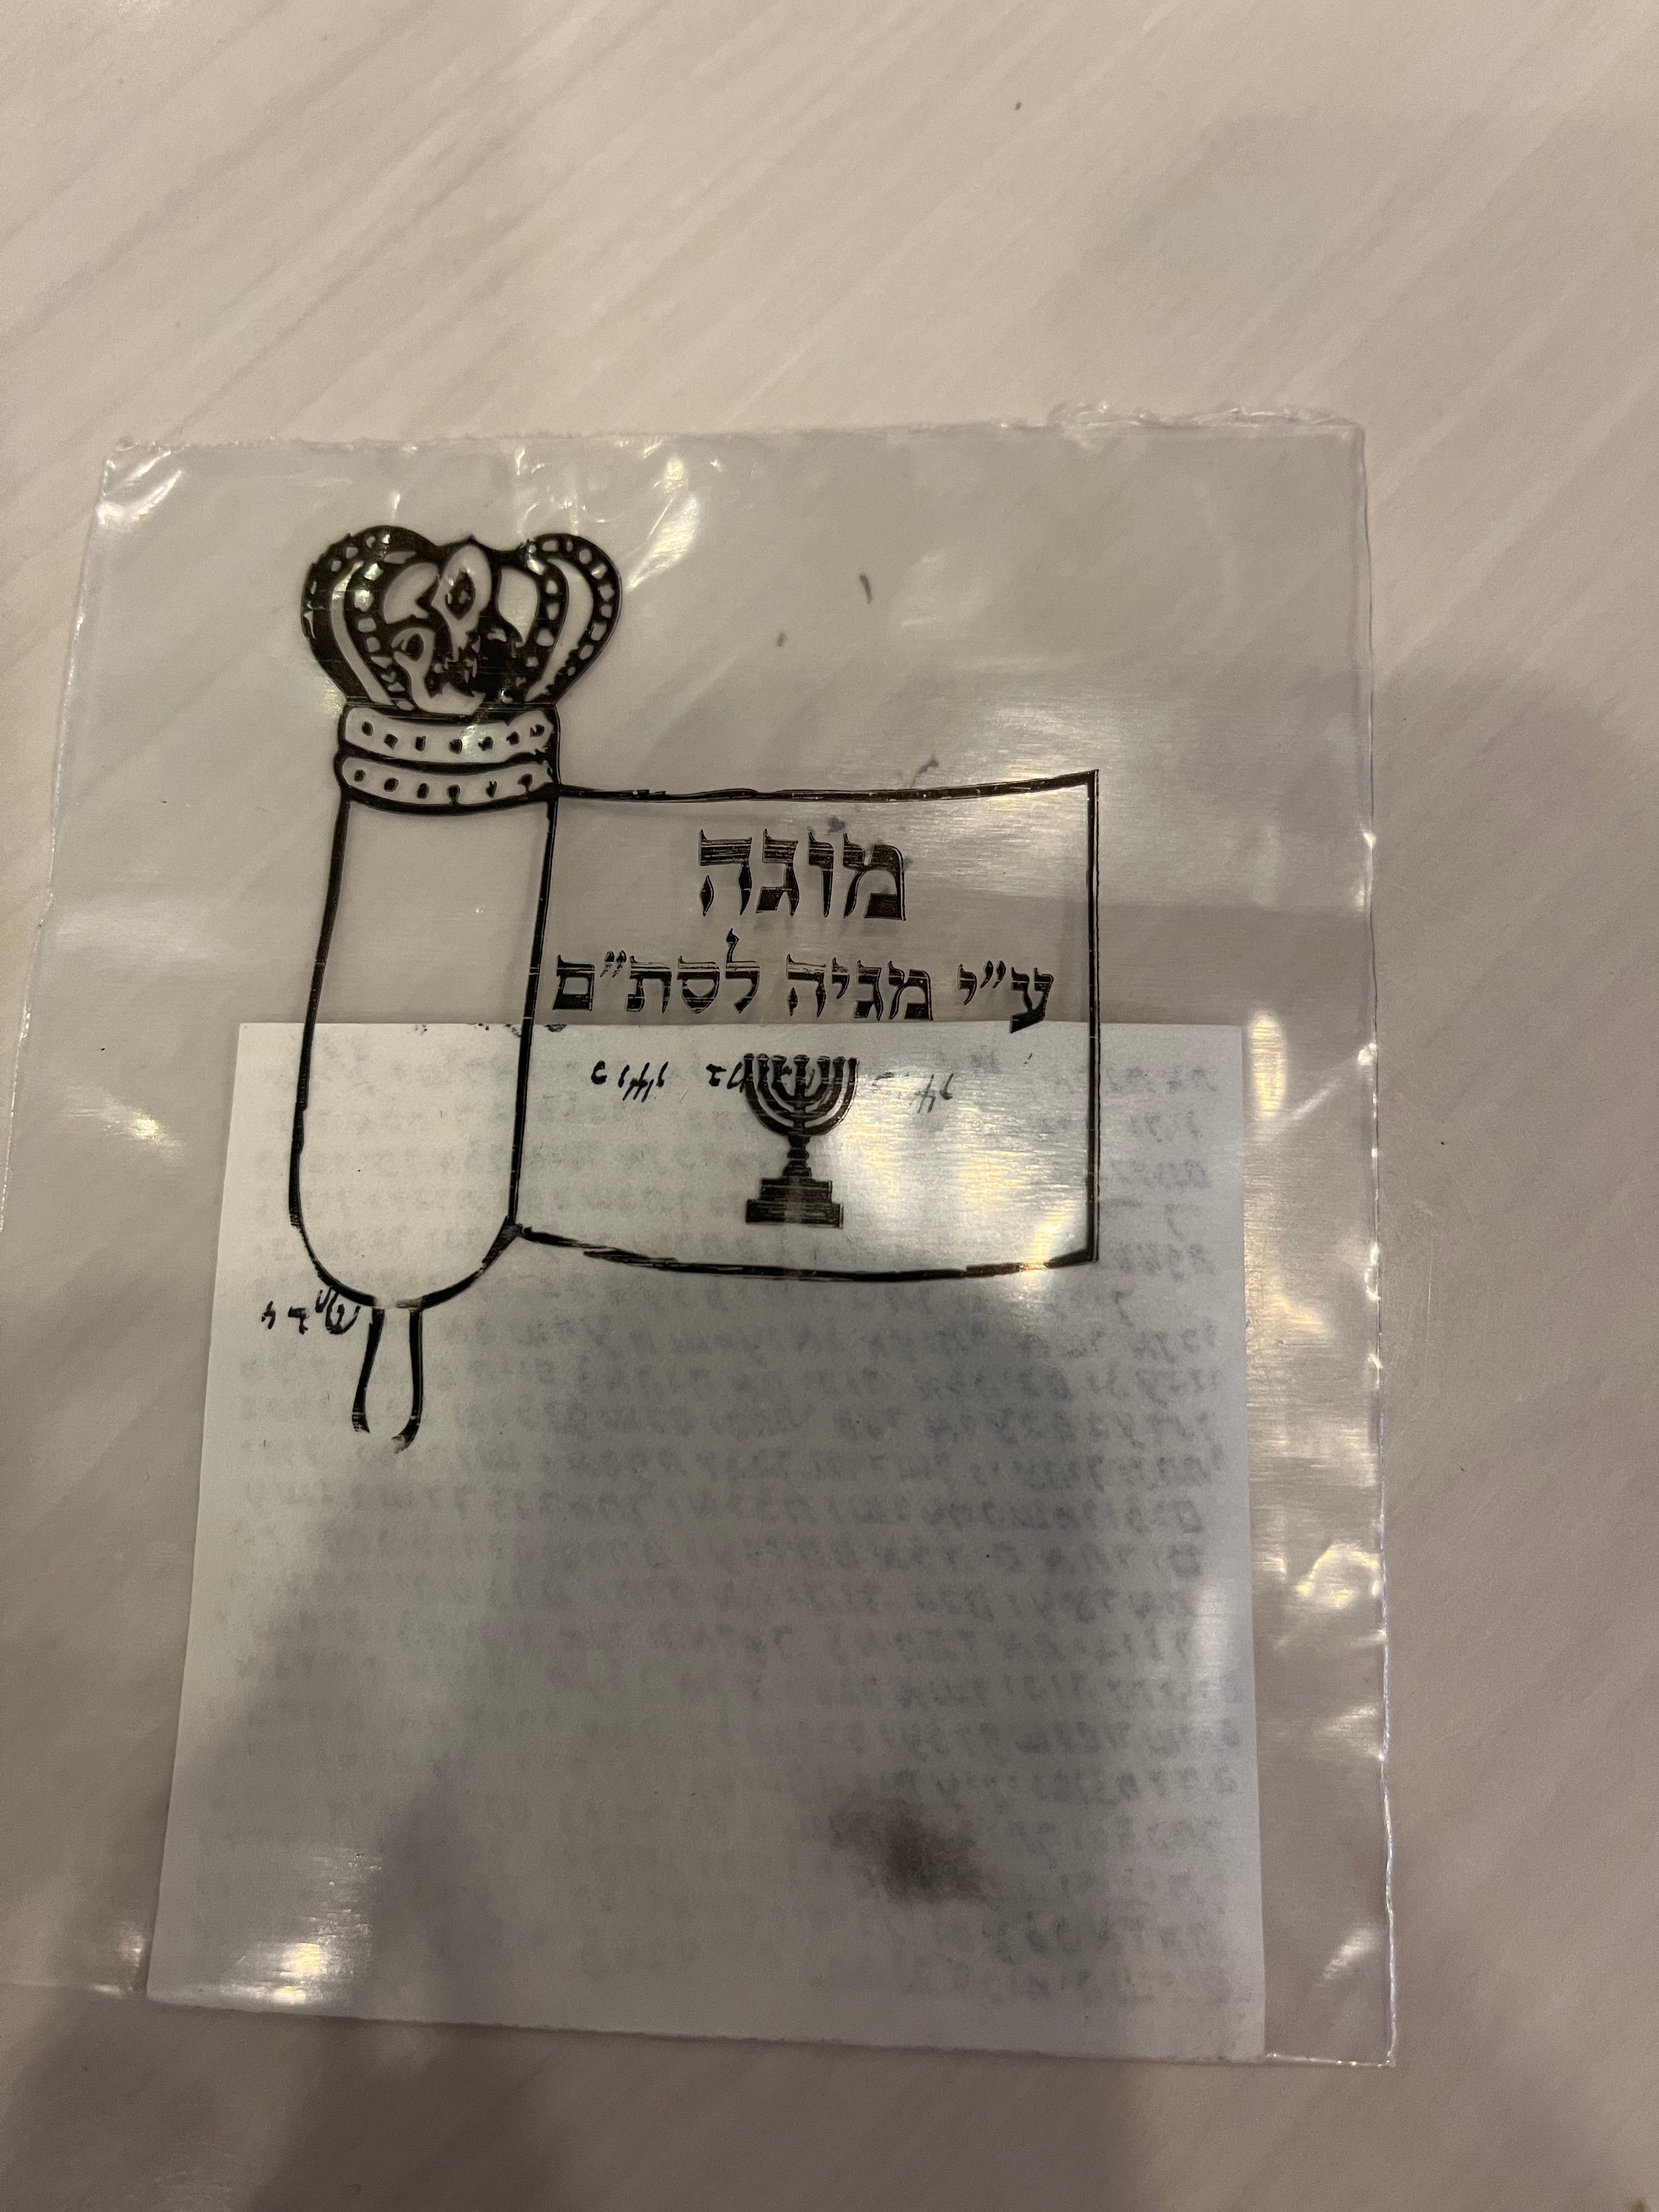 Kosher scroll